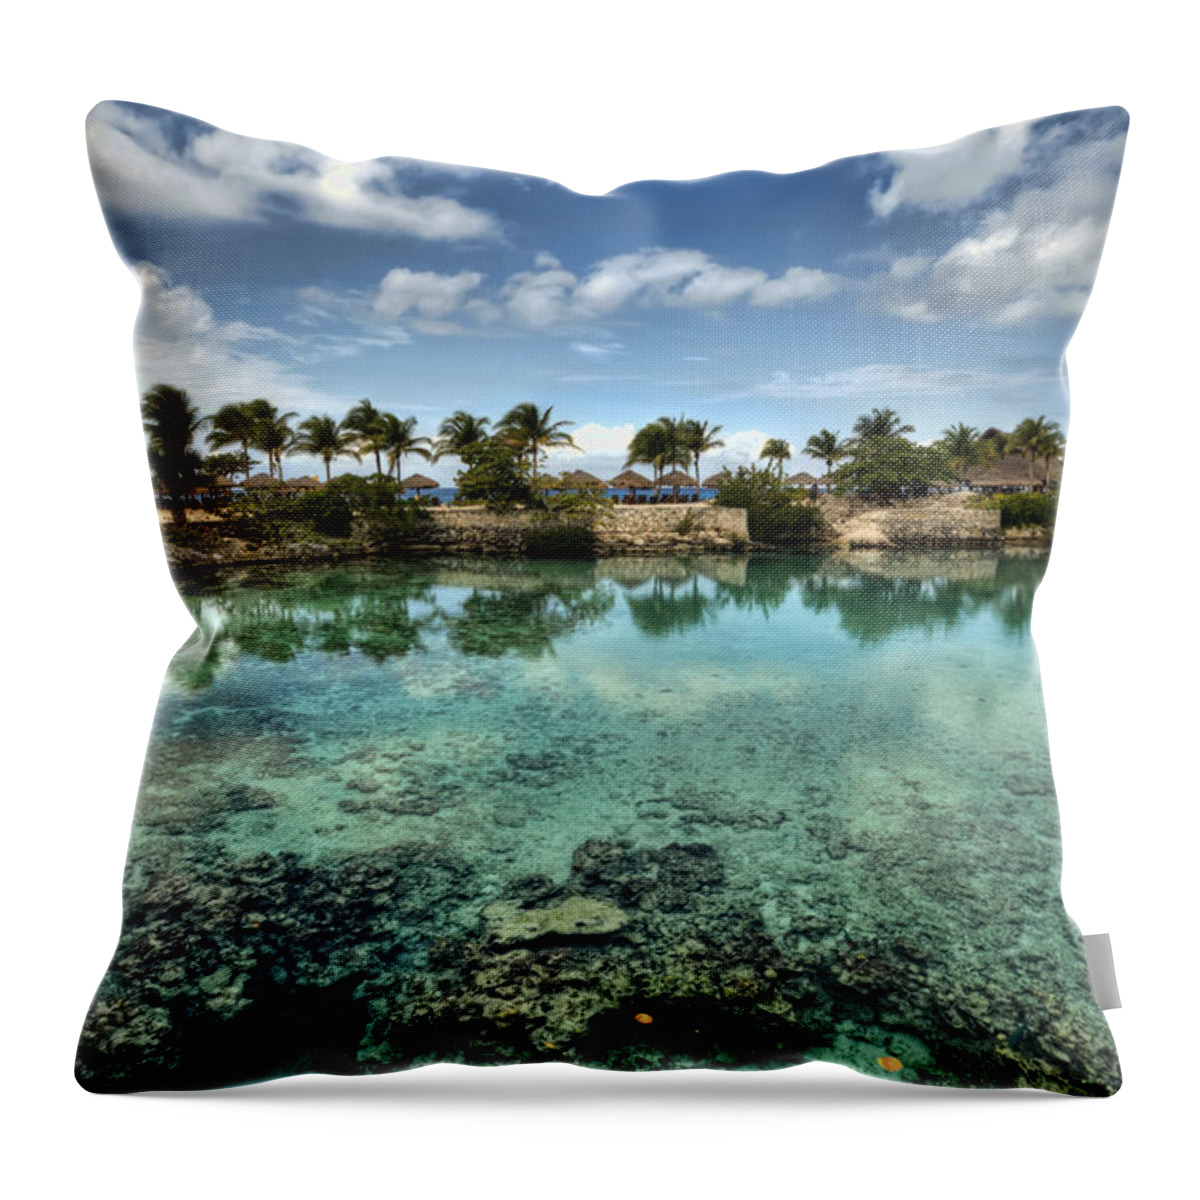 Hdr Throw Pillow featuring the photograph Chankanaab Lagoon by Brad Granger